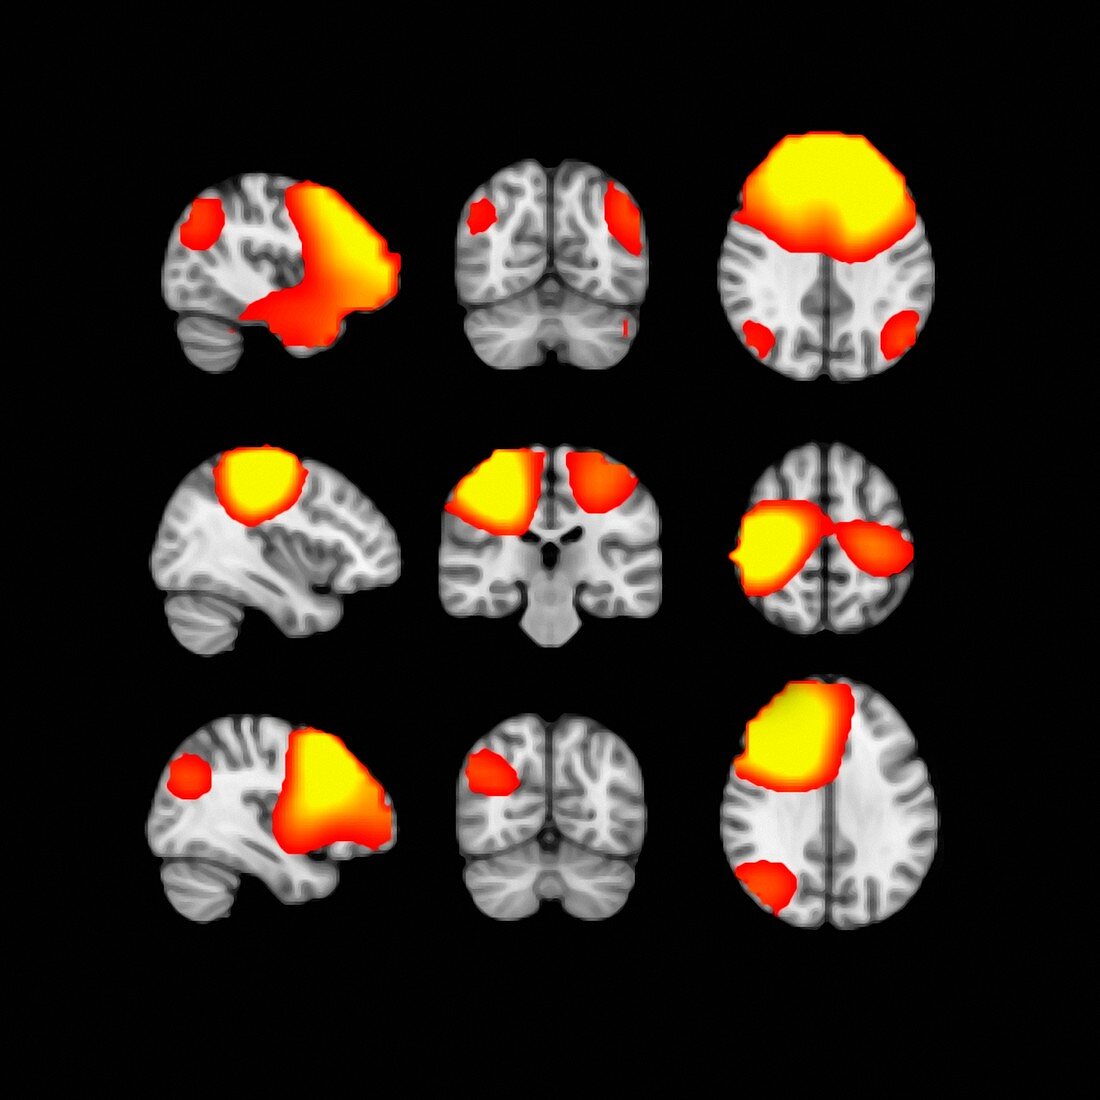 MEG brain scans